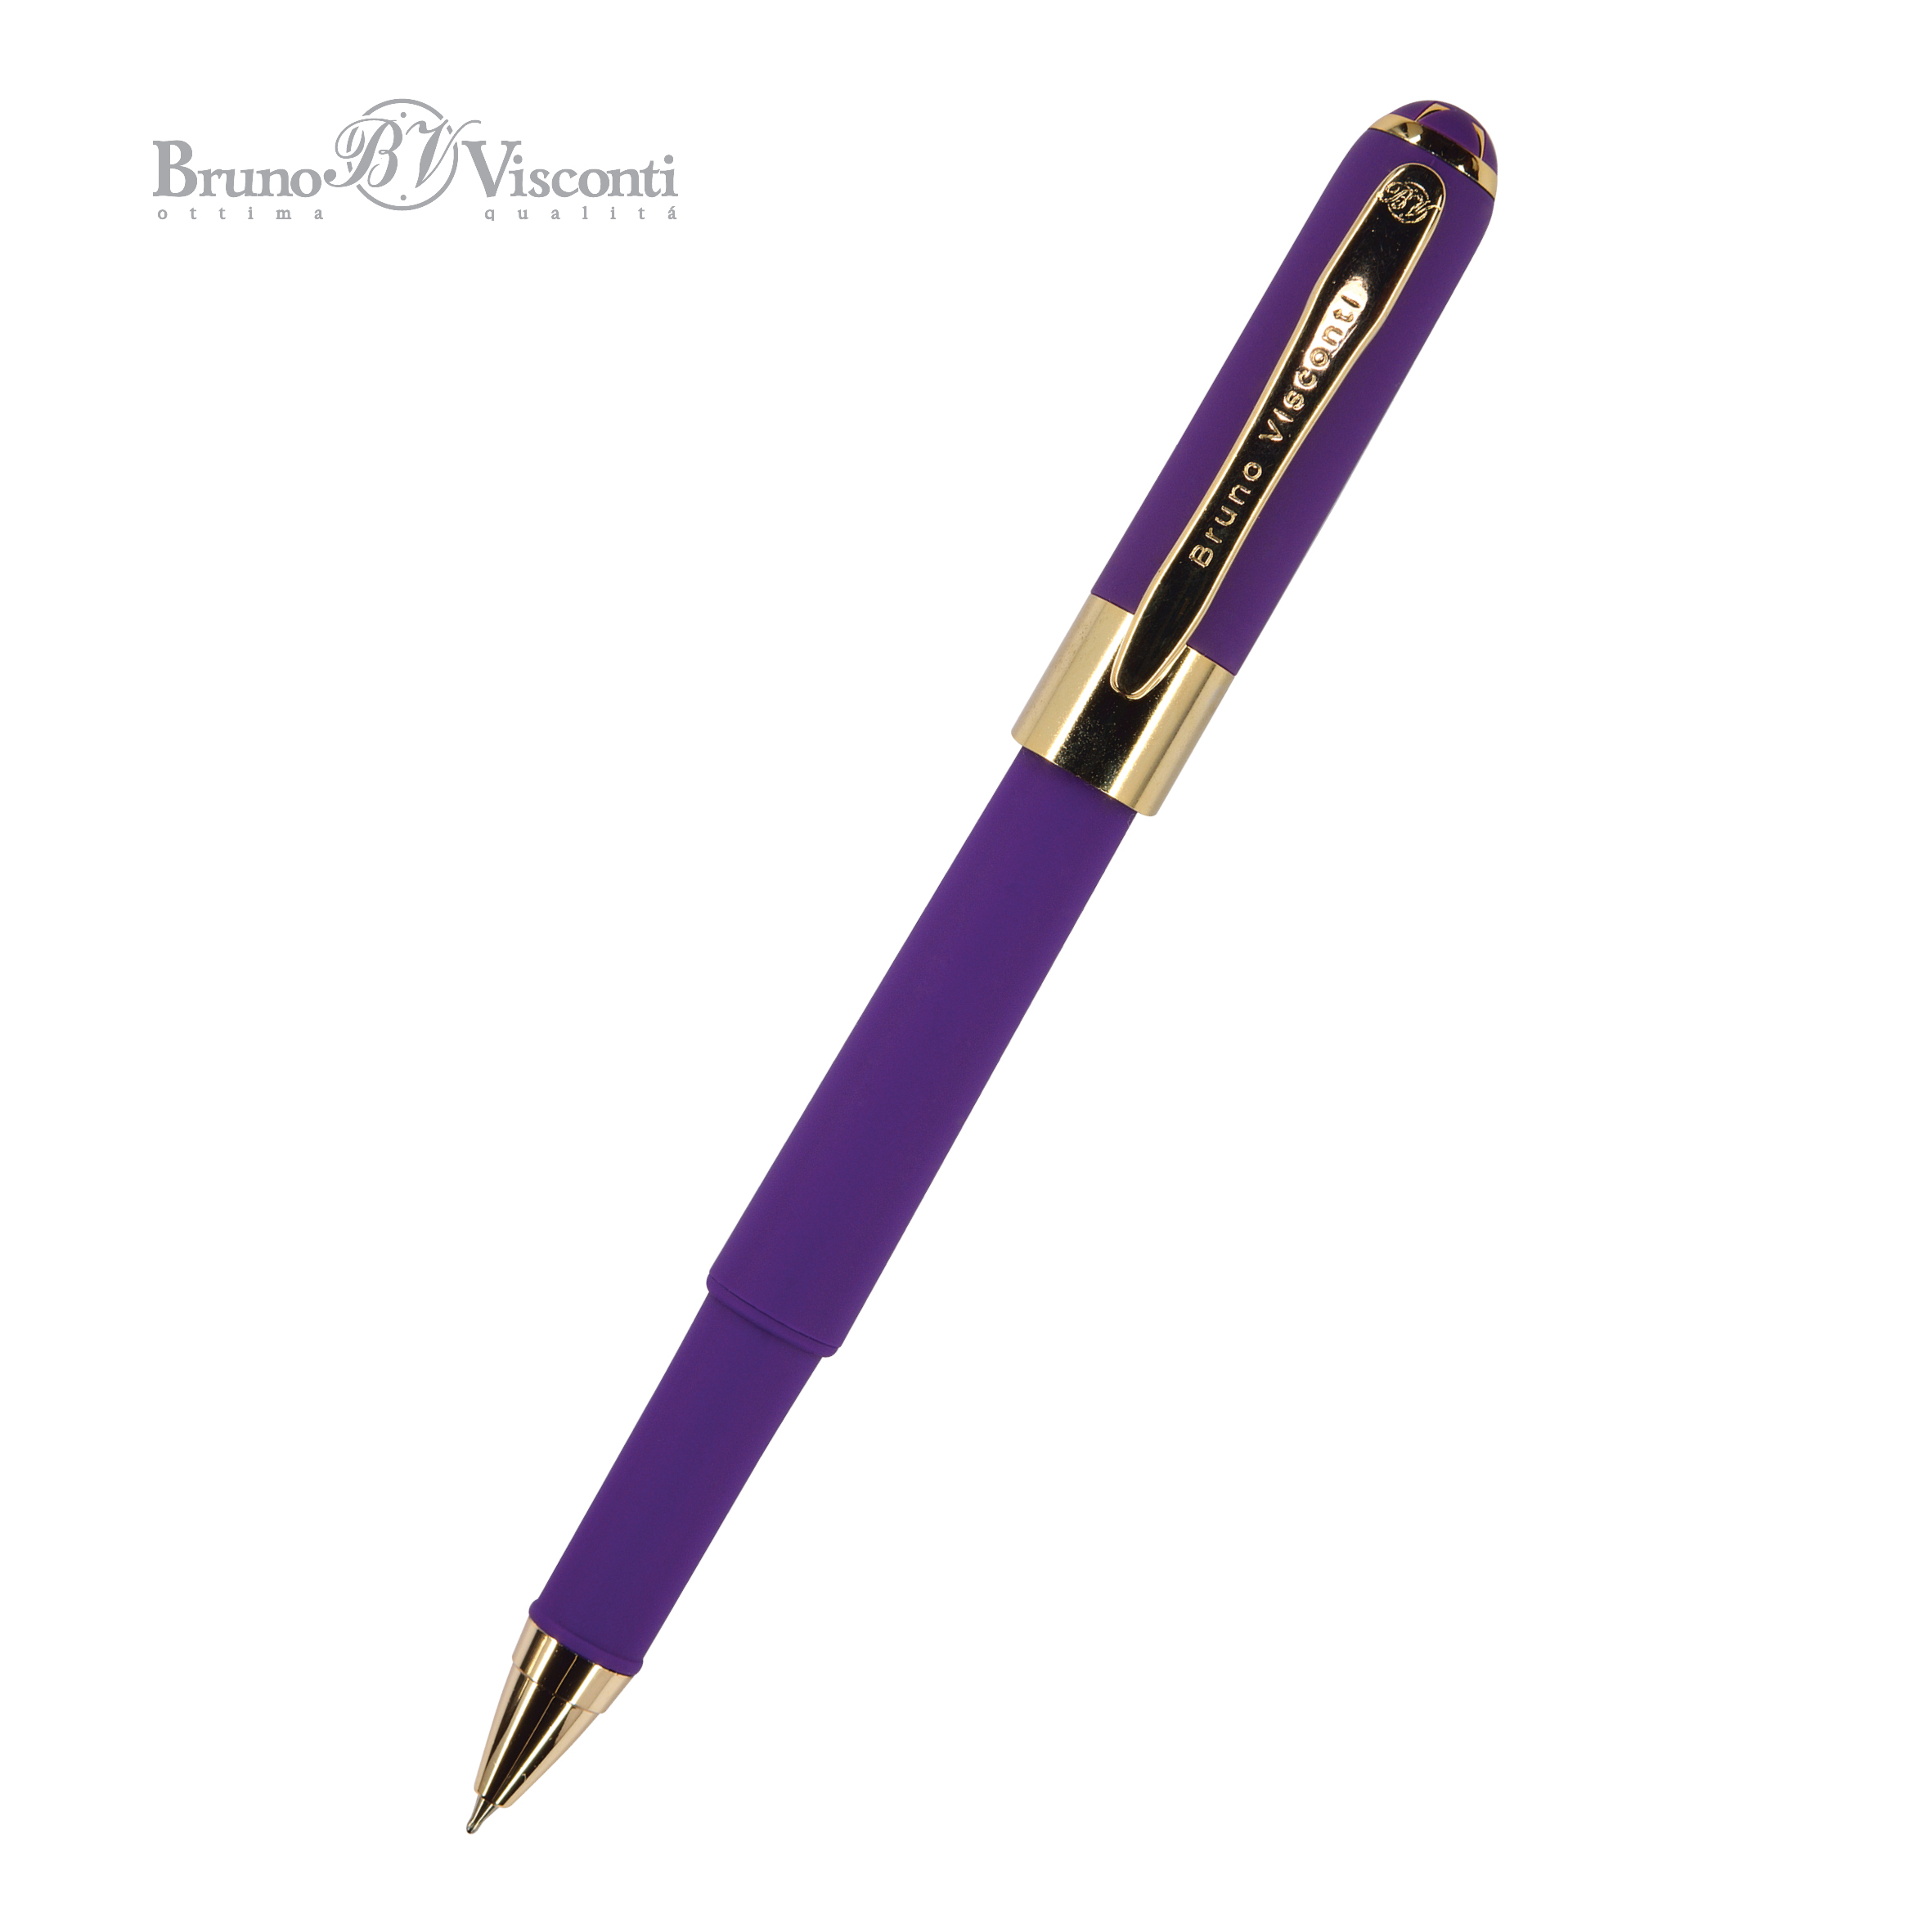 Ручка подар шар BV Monaco синяя 0,5мм фиолетовый корпус